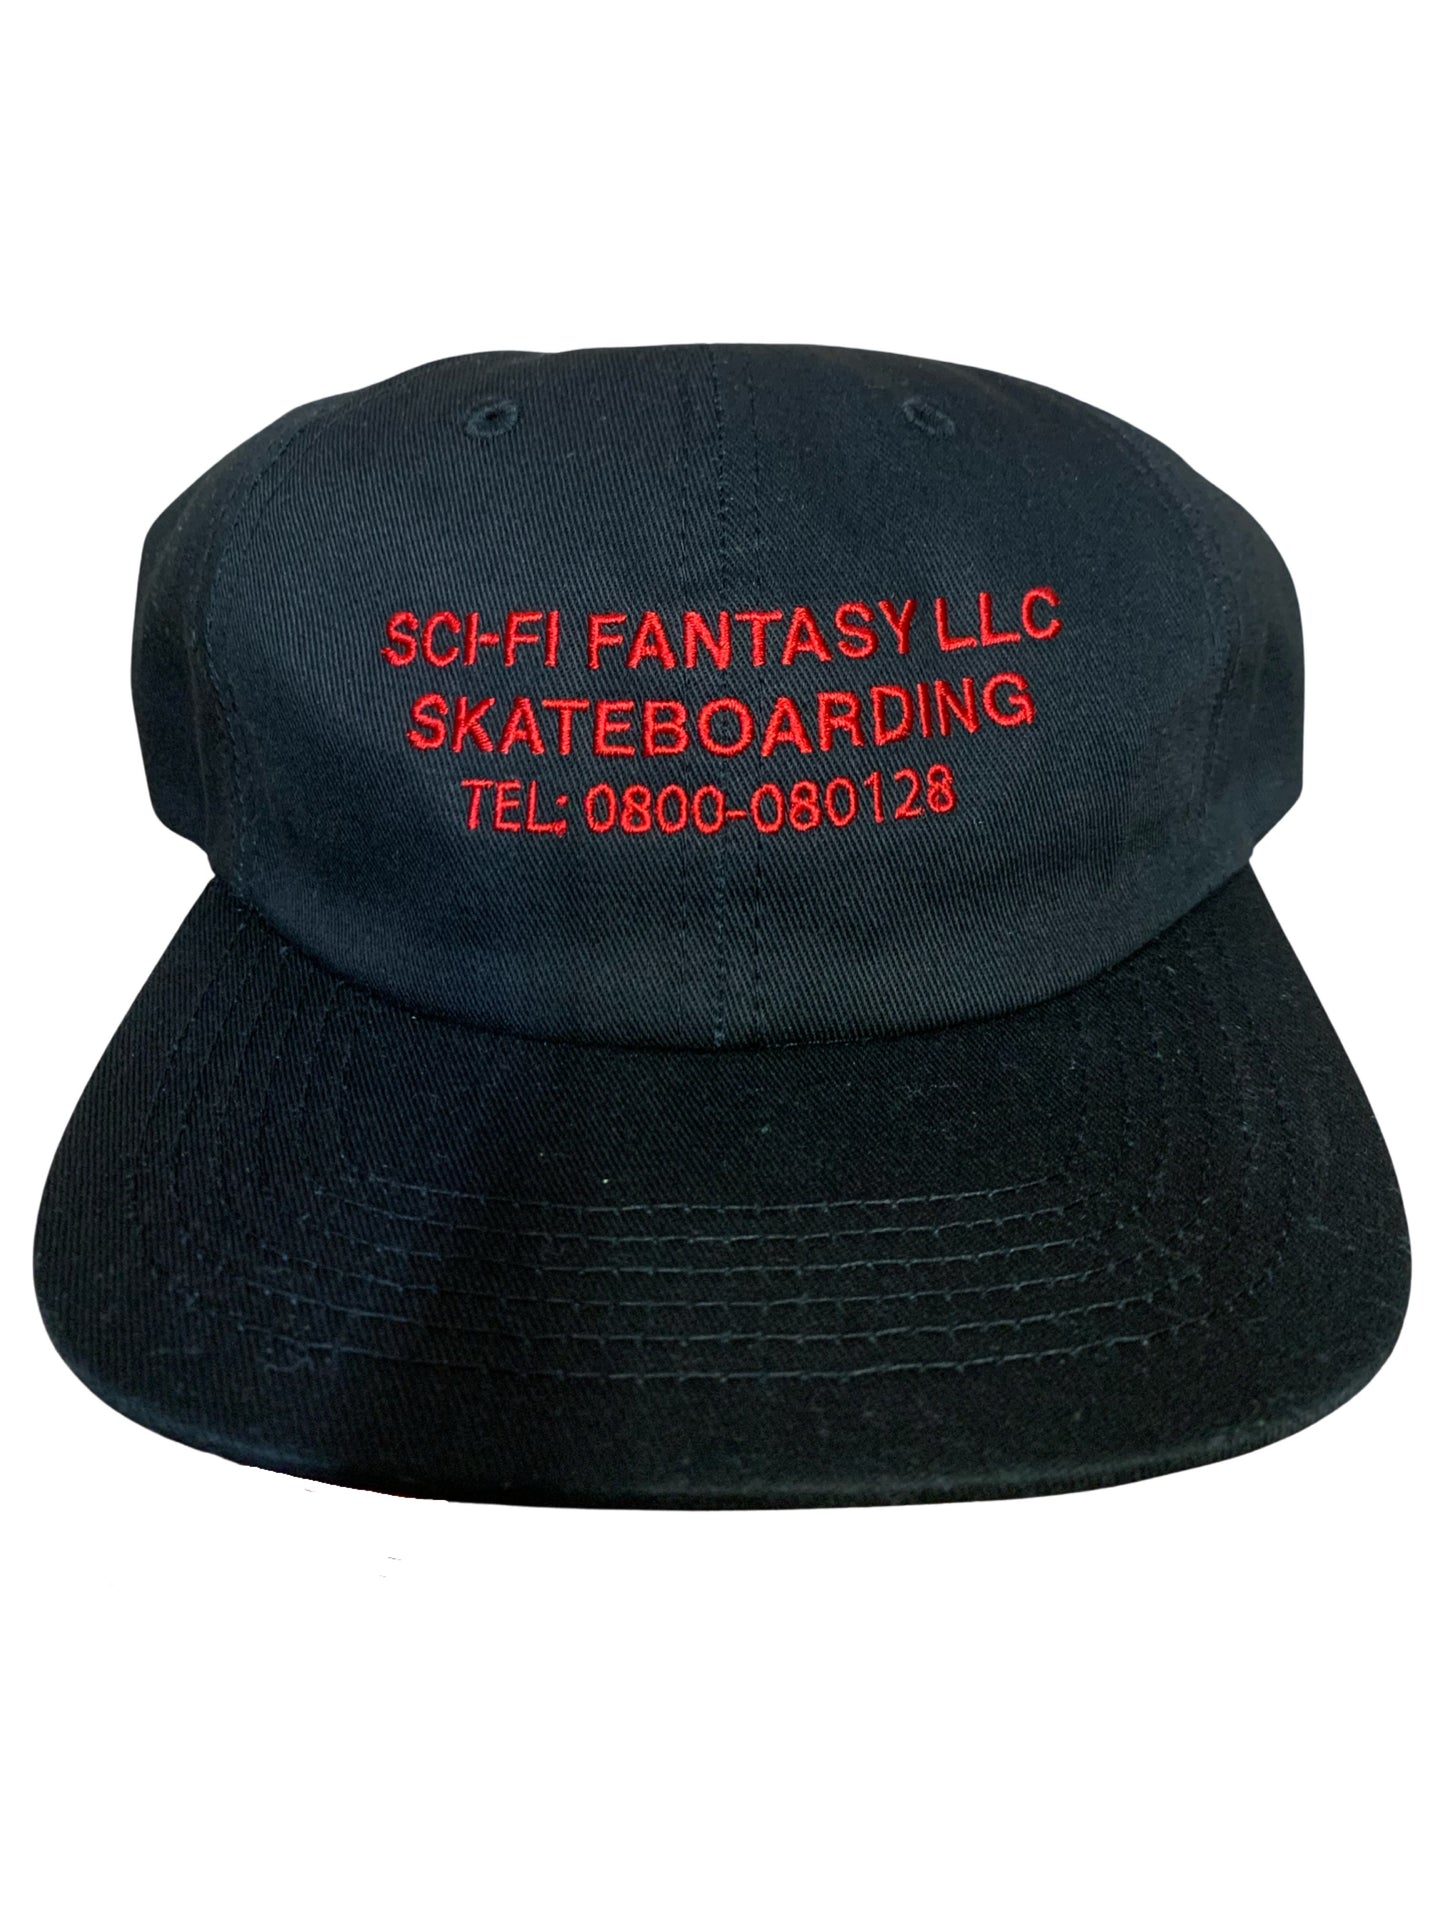 Sci-Fi Fantasy Business Post Hat